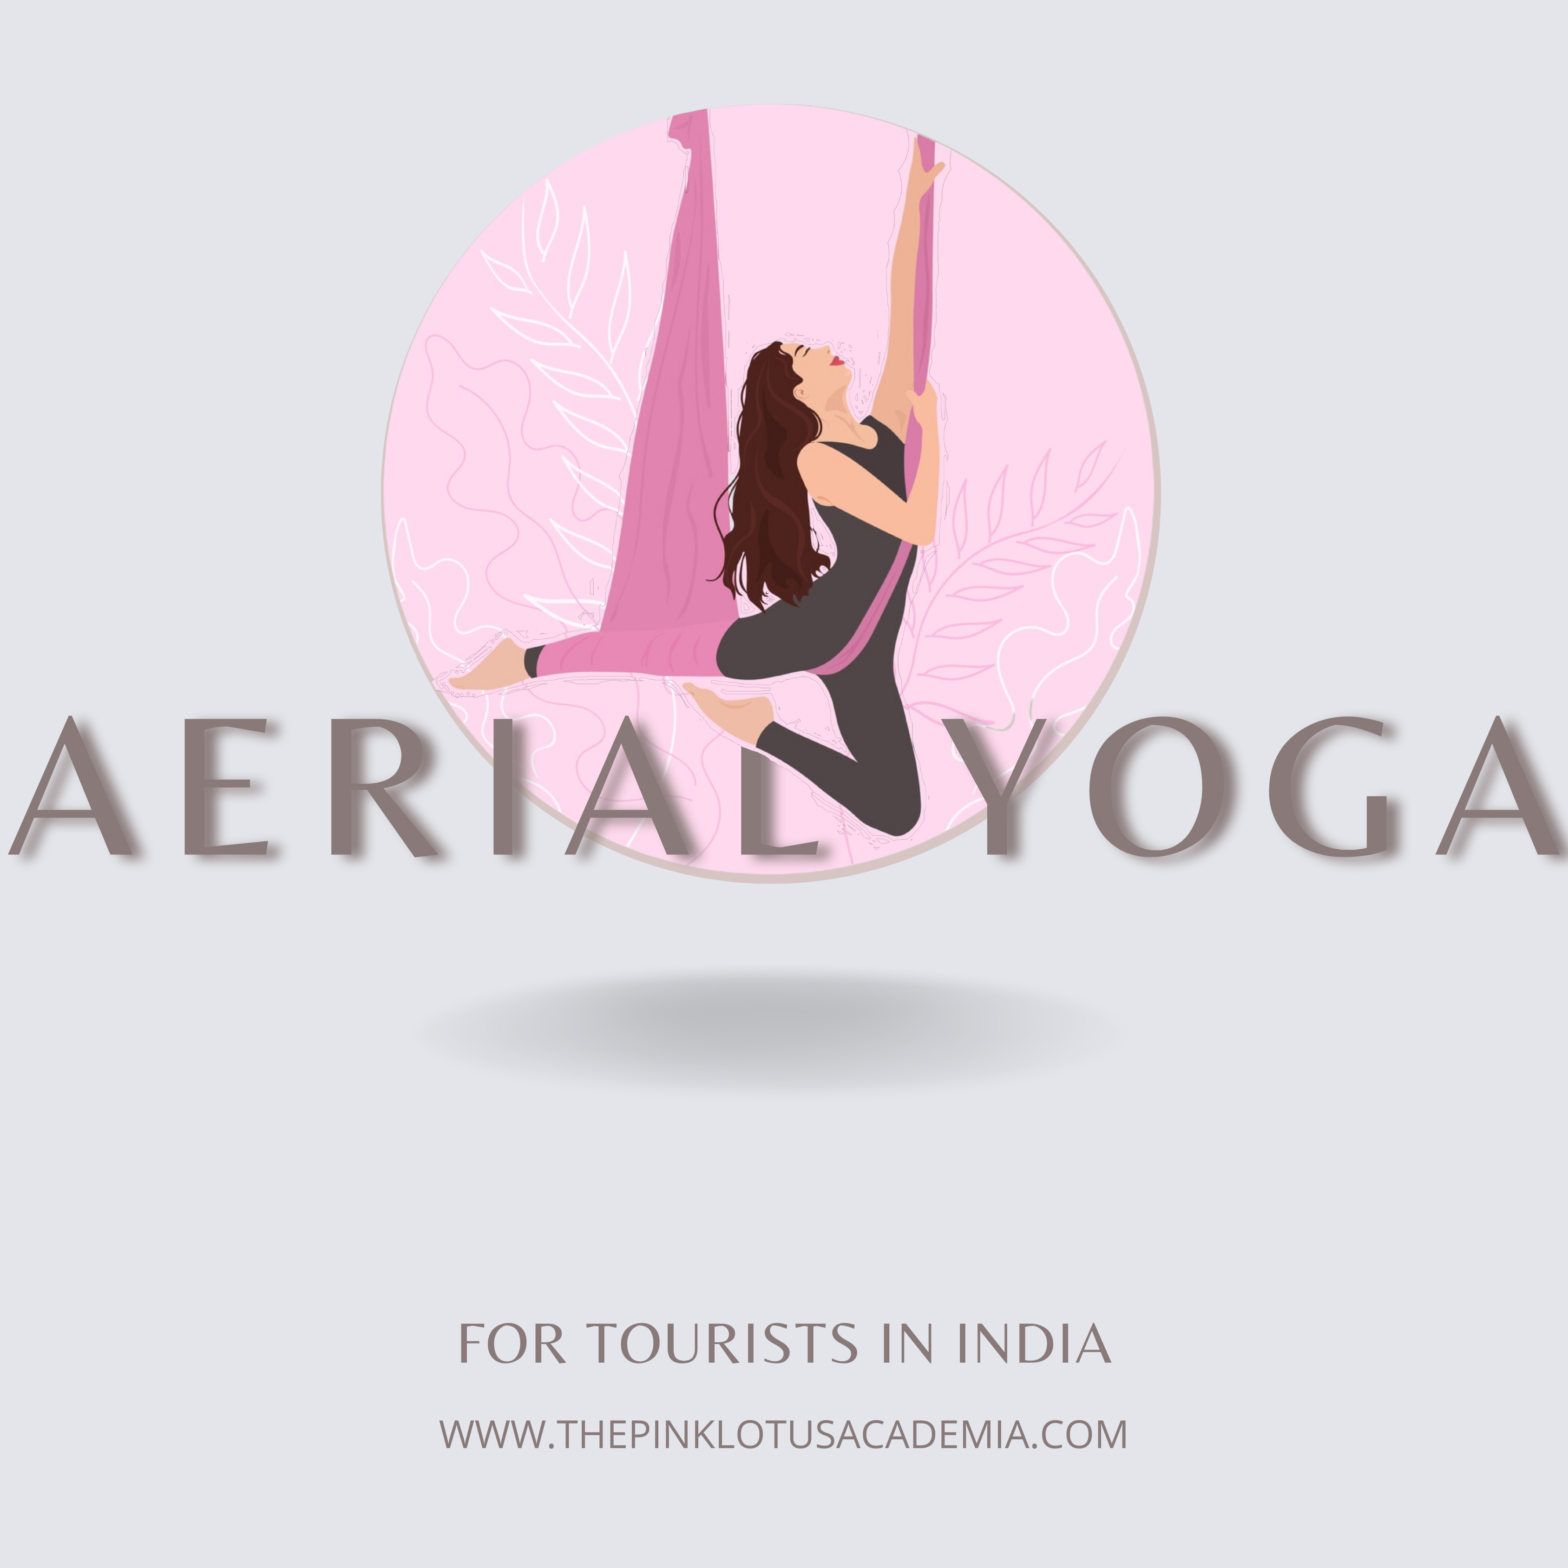 Aerial yoga illustration